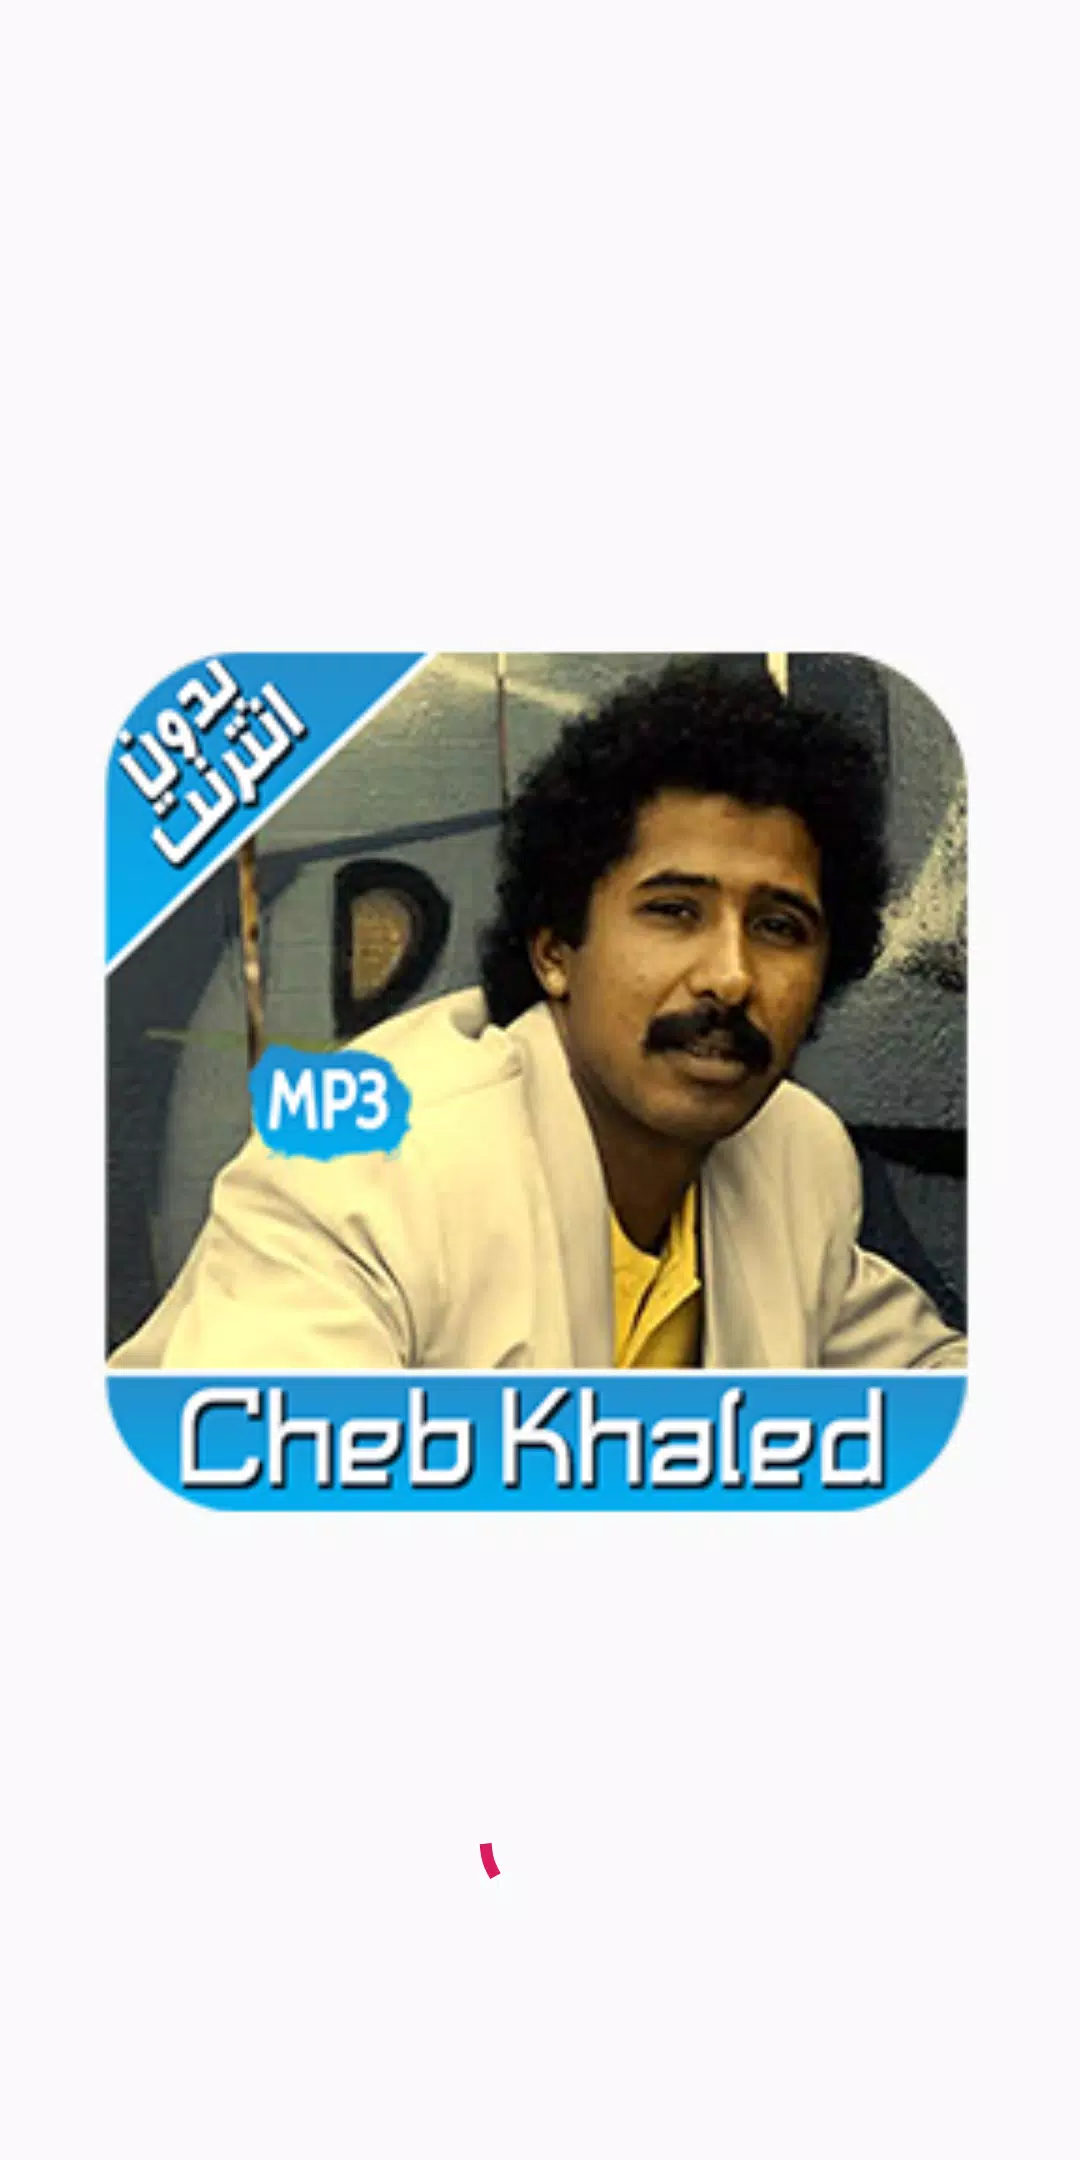 جديد أغاني الشاب خالد بدون نت - Cheb Khaled APK pour Android Télécharger